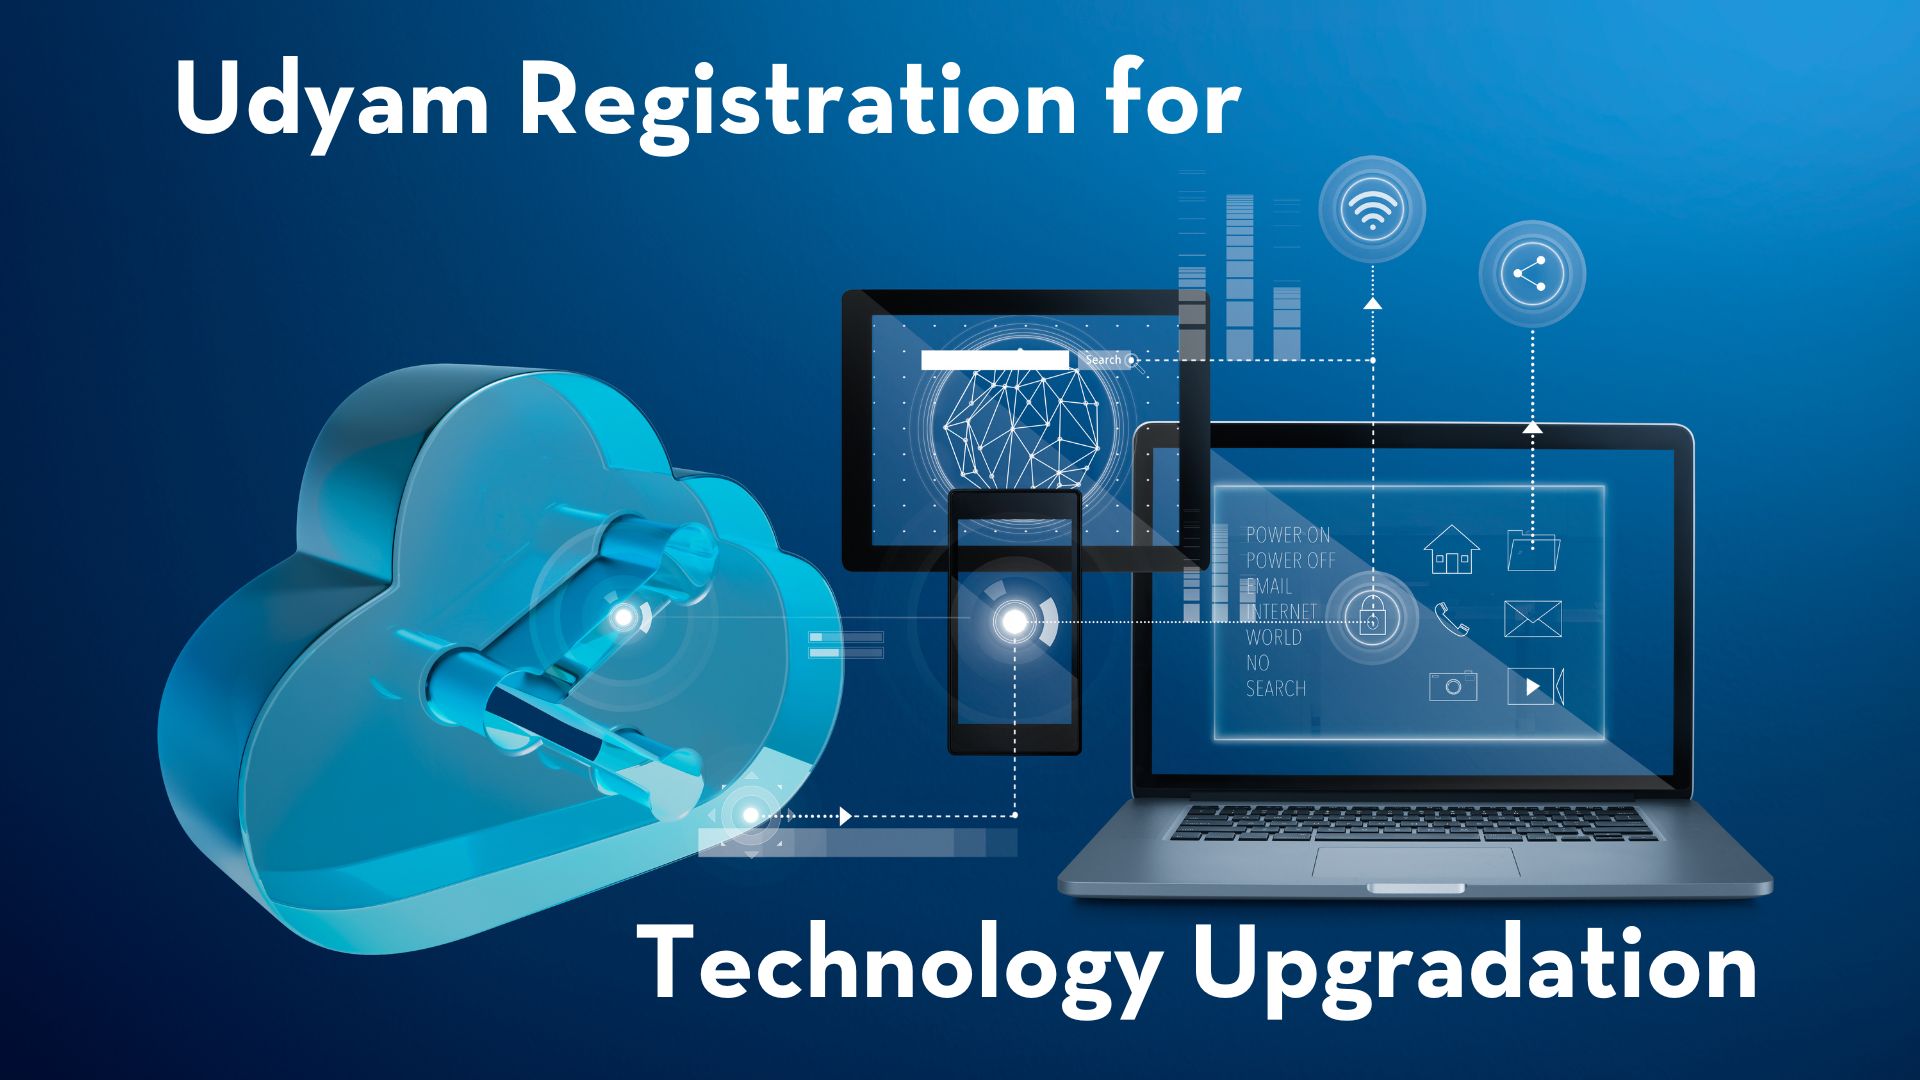 Udyam Registration for Technology Upgradation